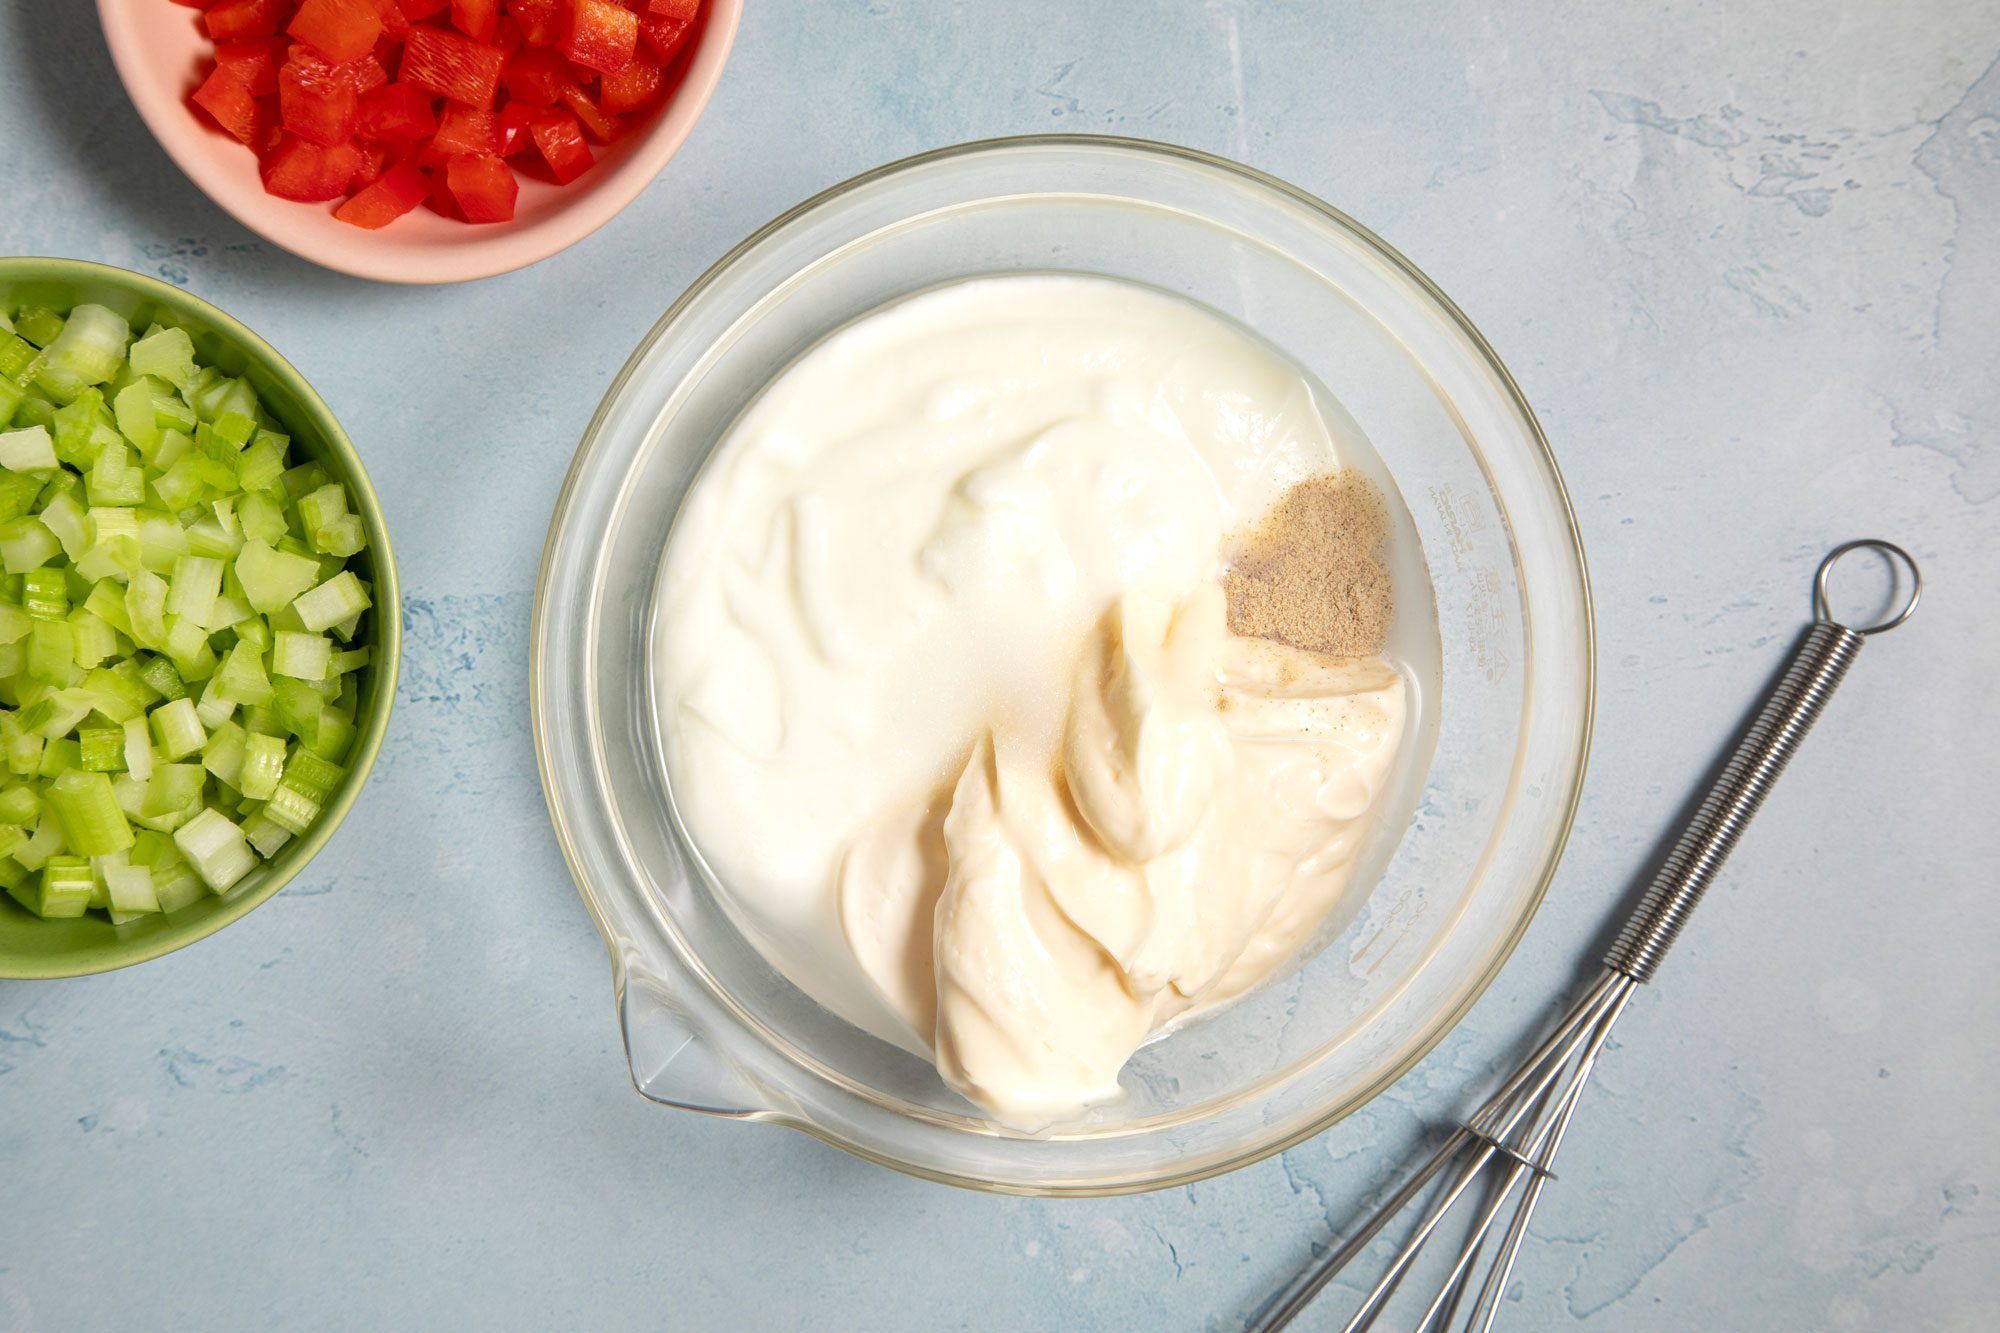 Mix the mayonnaise, yogurt, vinegar, salt and white pepper